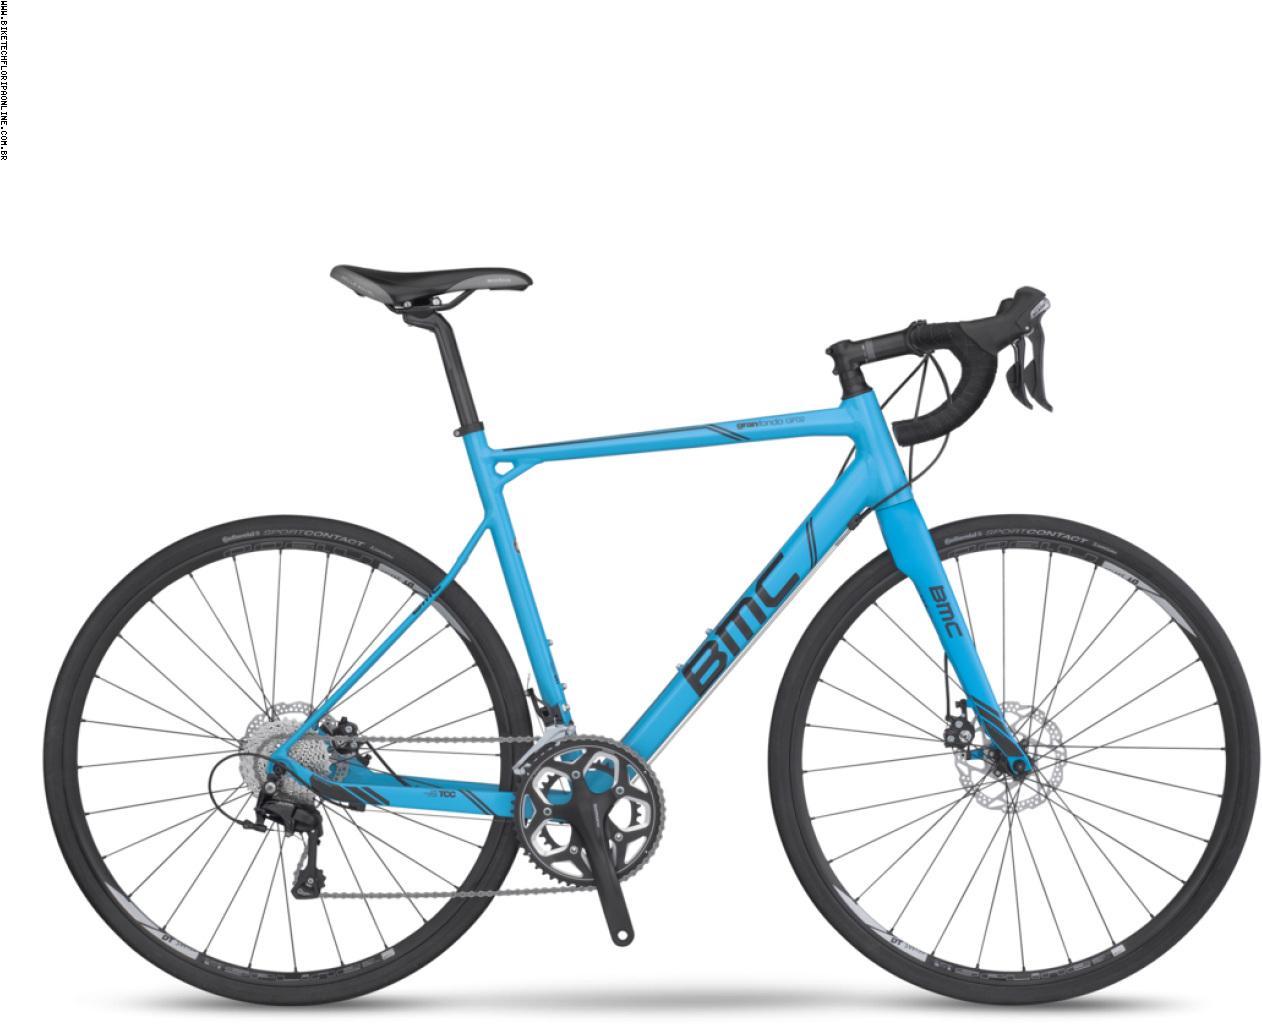 Biketech Csm Bike Zoom Headerimage 3800 1441 My16 Gf02 - Jamis Renegade Exile 2017 Clipart (1300x1300), Png Download